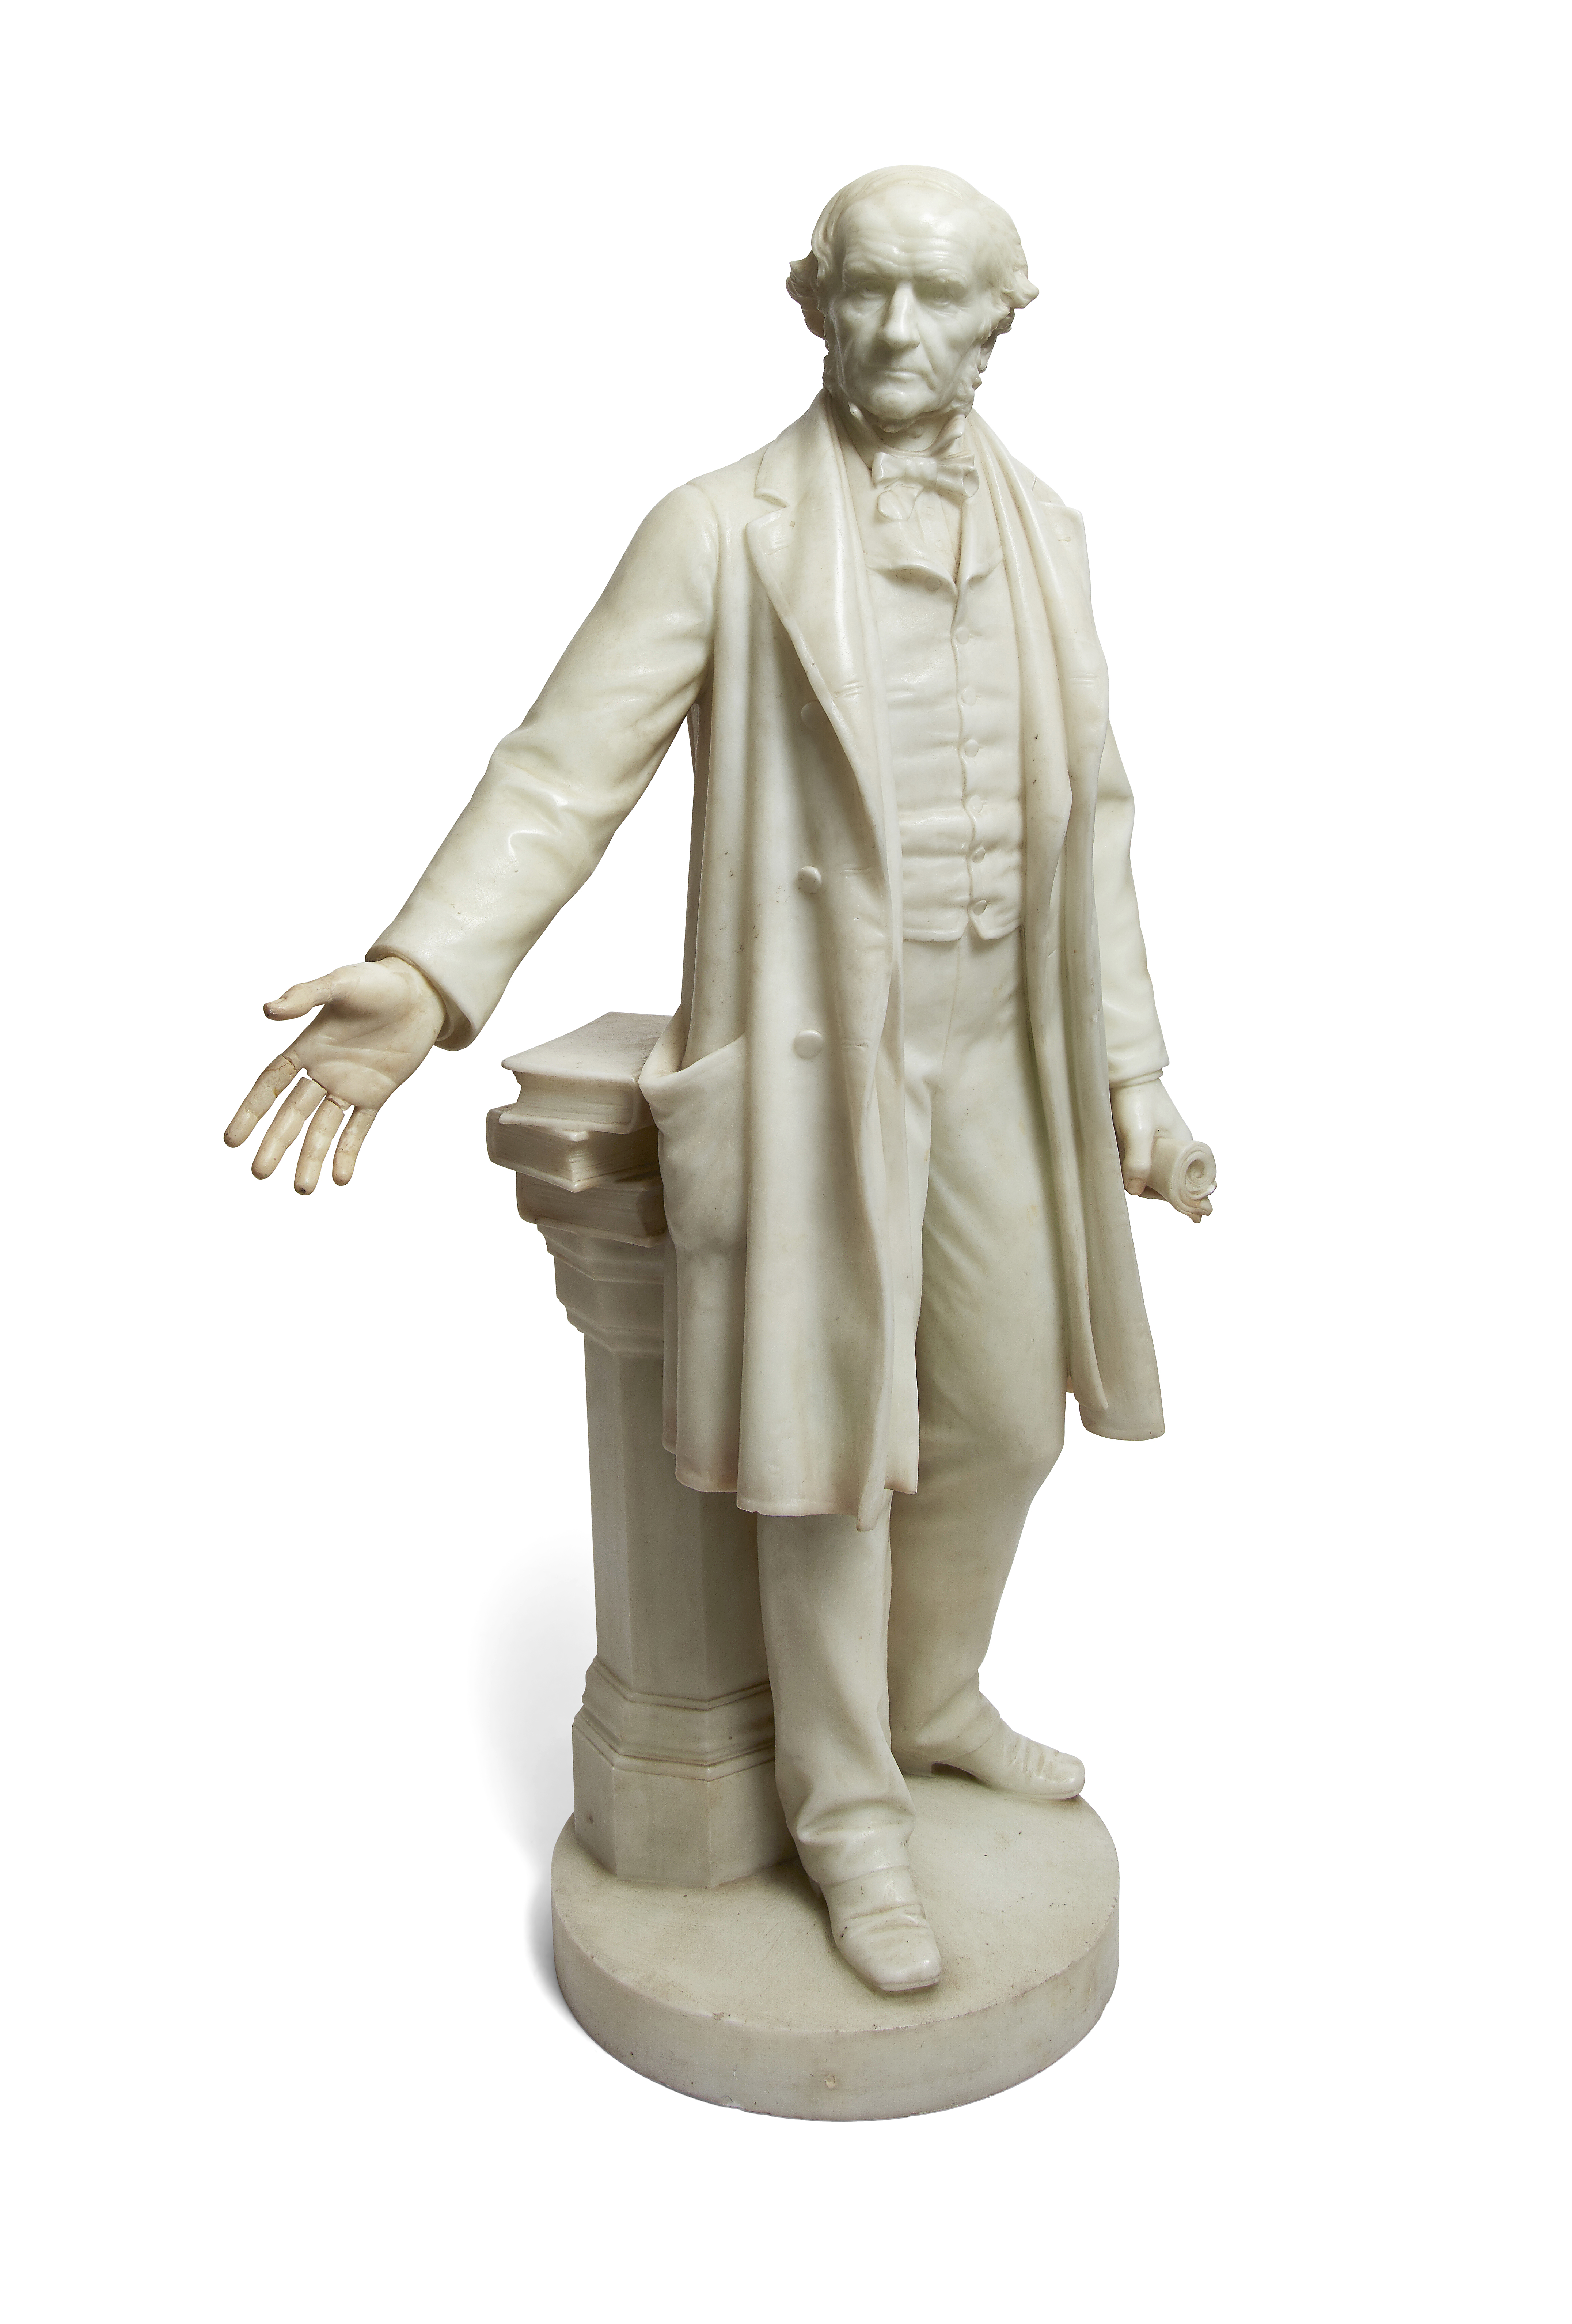 After Albert Bruce-Joy, Irish, 1842-1924, a marble statue of William Ewart Gladstone, 1809-98, la...